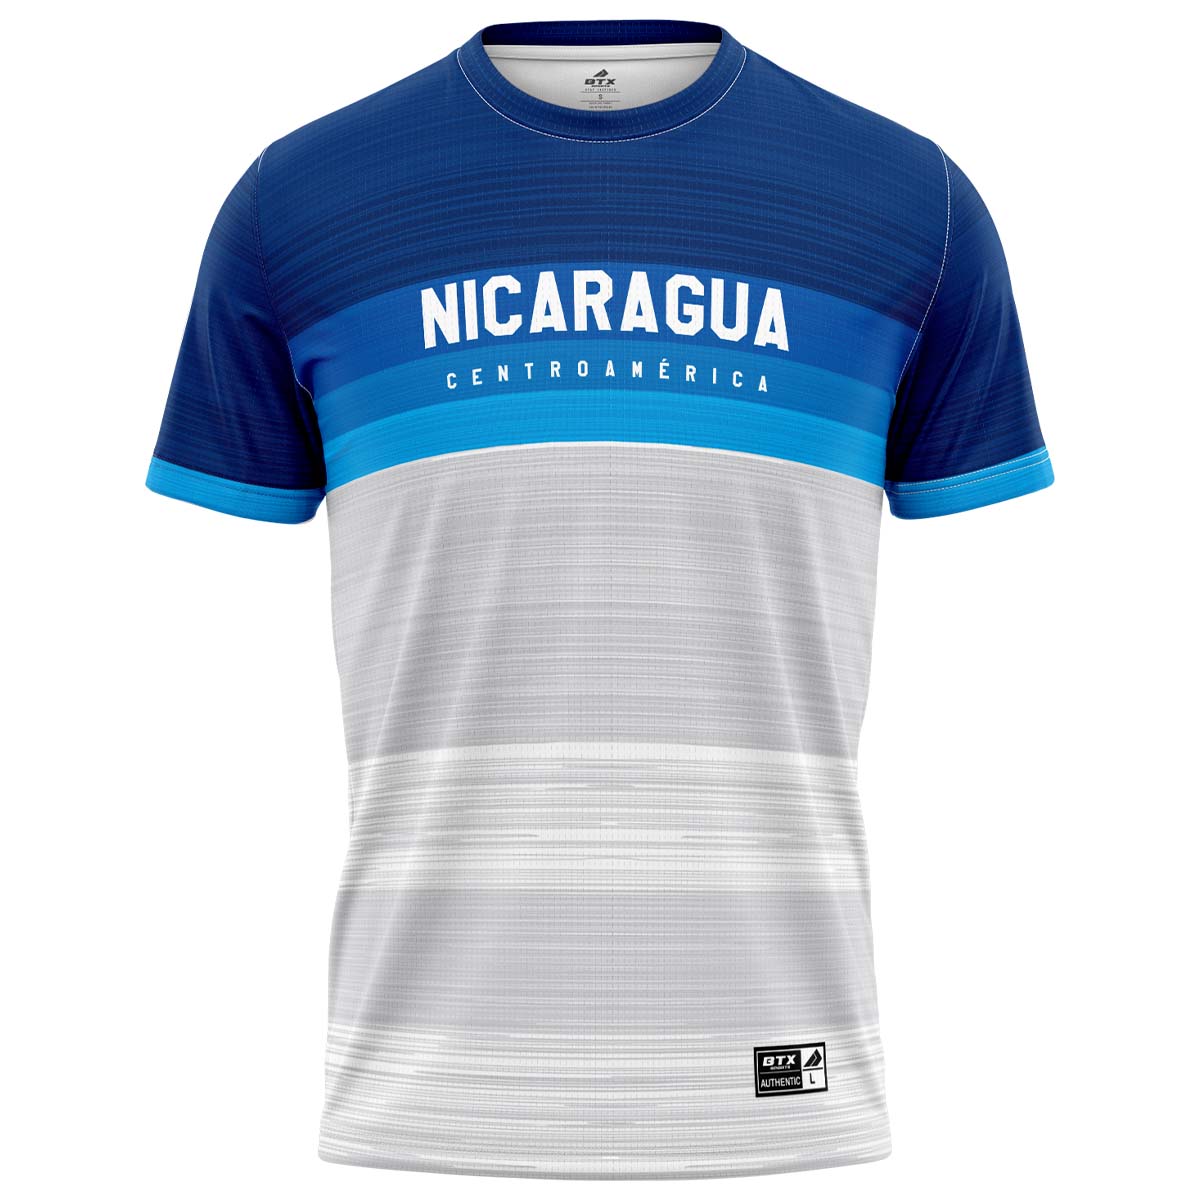 Camiseta NIcaragua Centroamérica azul niño